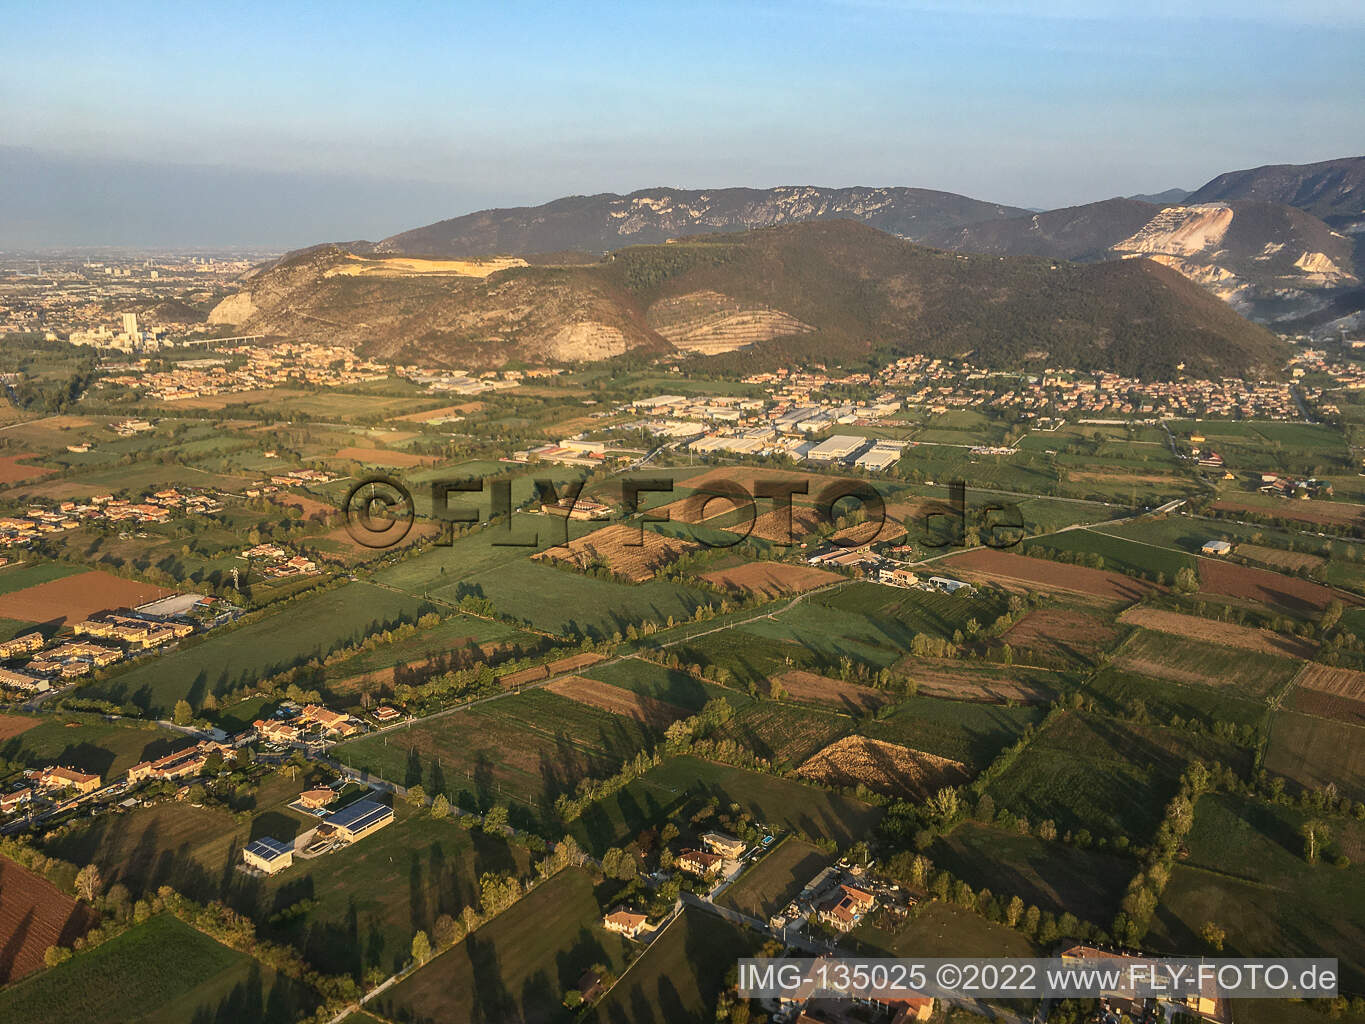 Mamorbrüche bei Mazzano in Nuvolera im Bundesland Brescia, Italien